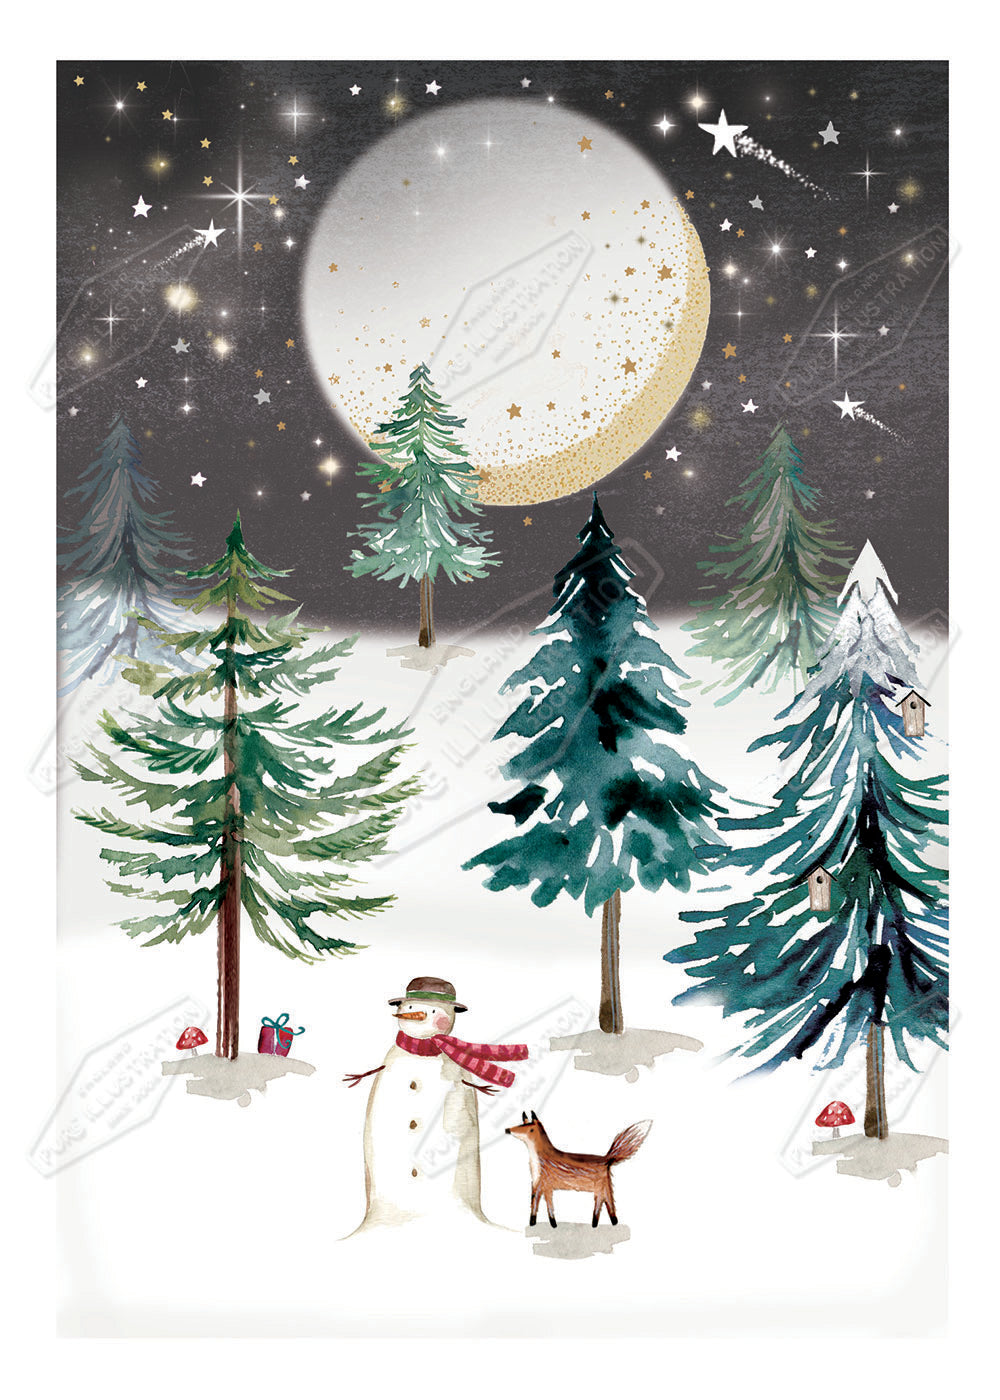 00030050DEV - Deva Evans is represented by Pure Art Licensing Agency - Christmas Greeting Card Design